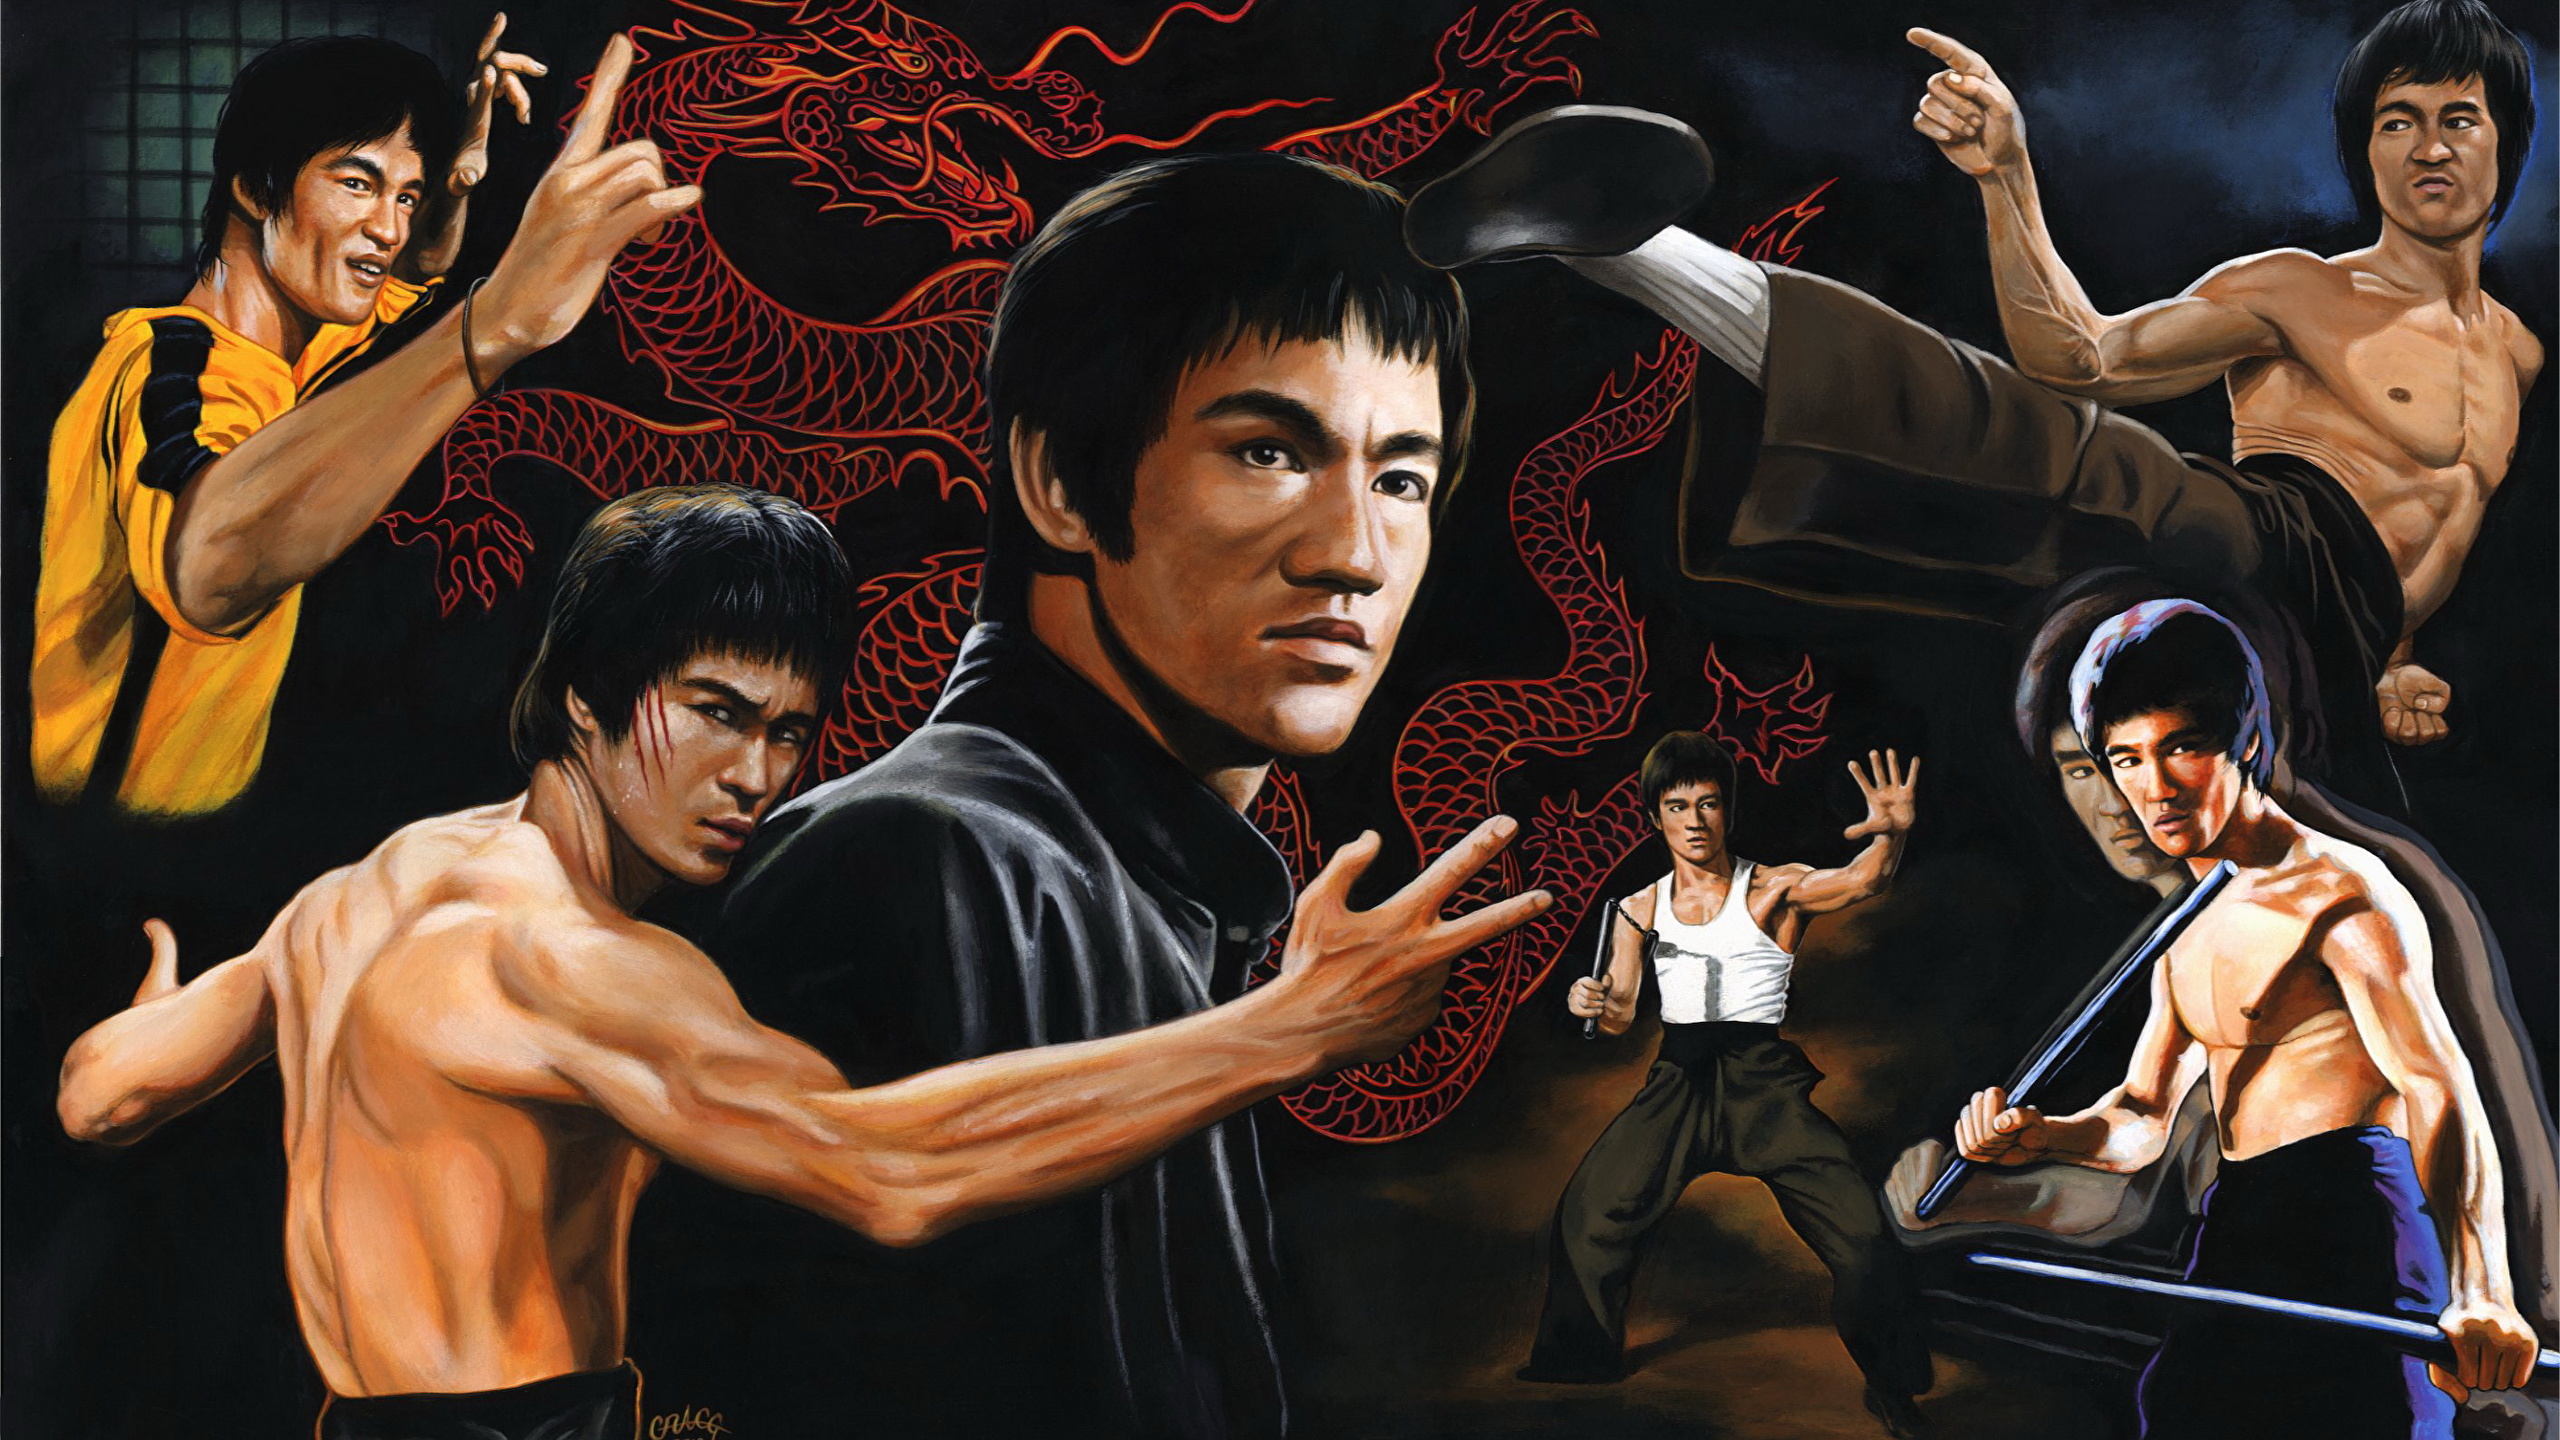 Bruce Lee , HD Wallpaper & Backgrounds